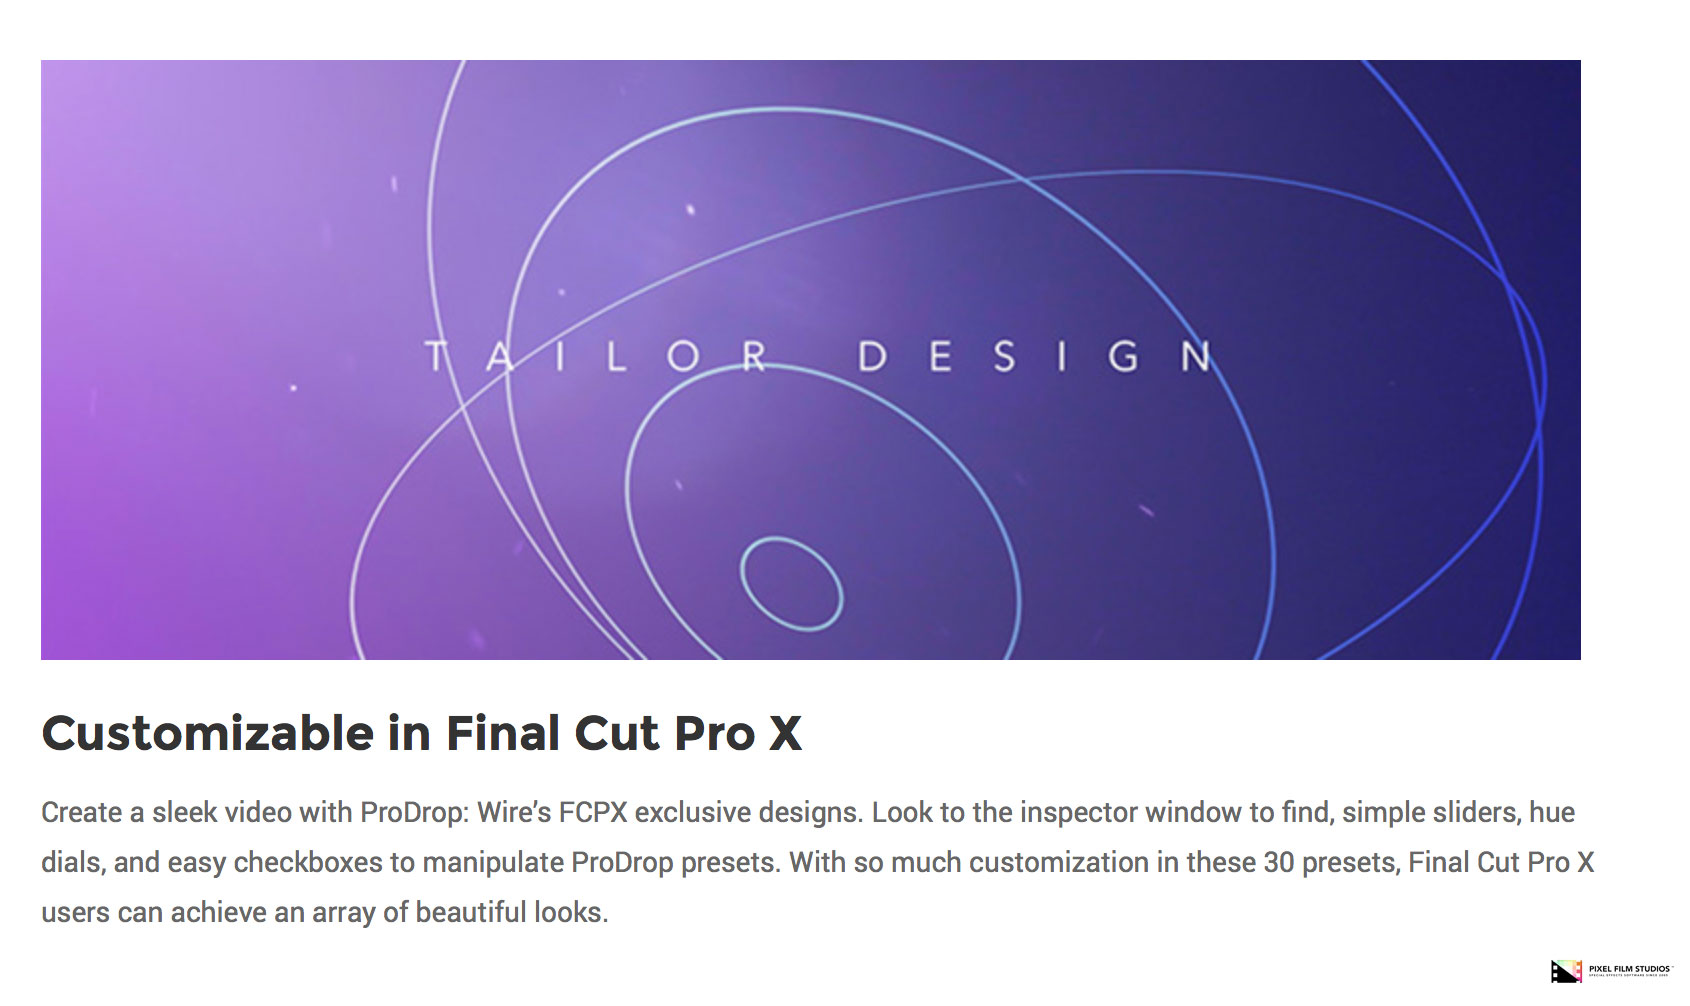 ProDrop Wire - Pixel Film Studios - Final Cut Pro X